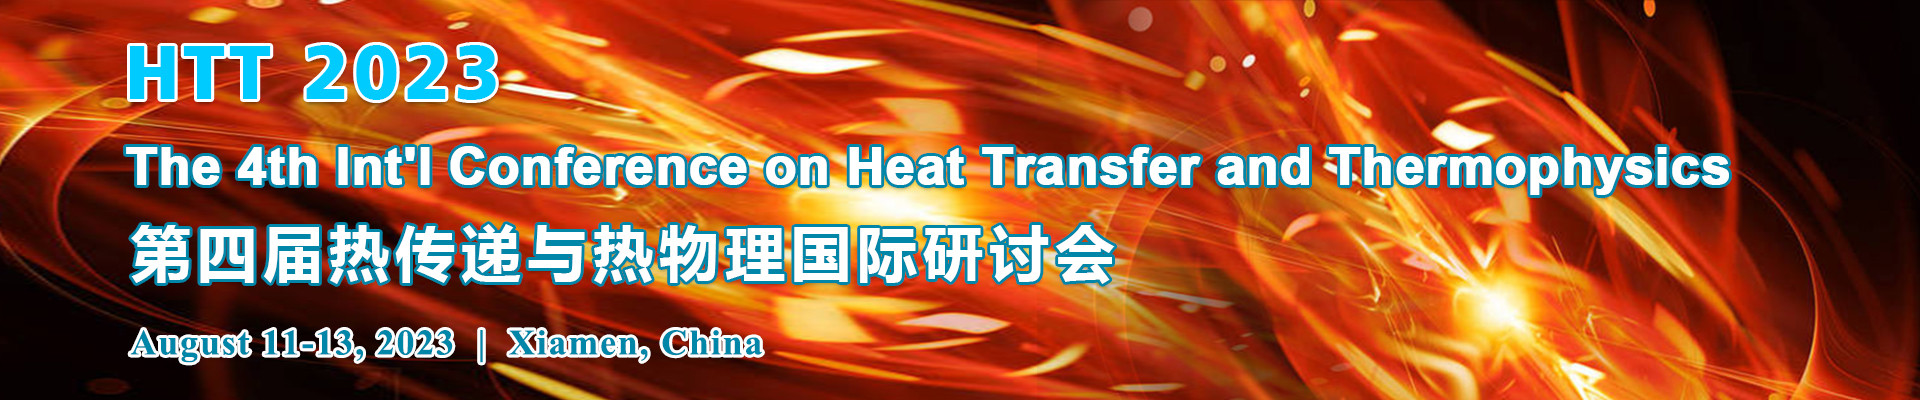 第四届热传递与热物理国际研讨会（The 4th Int'l Conference on Heat Transfer and Thermophysics）